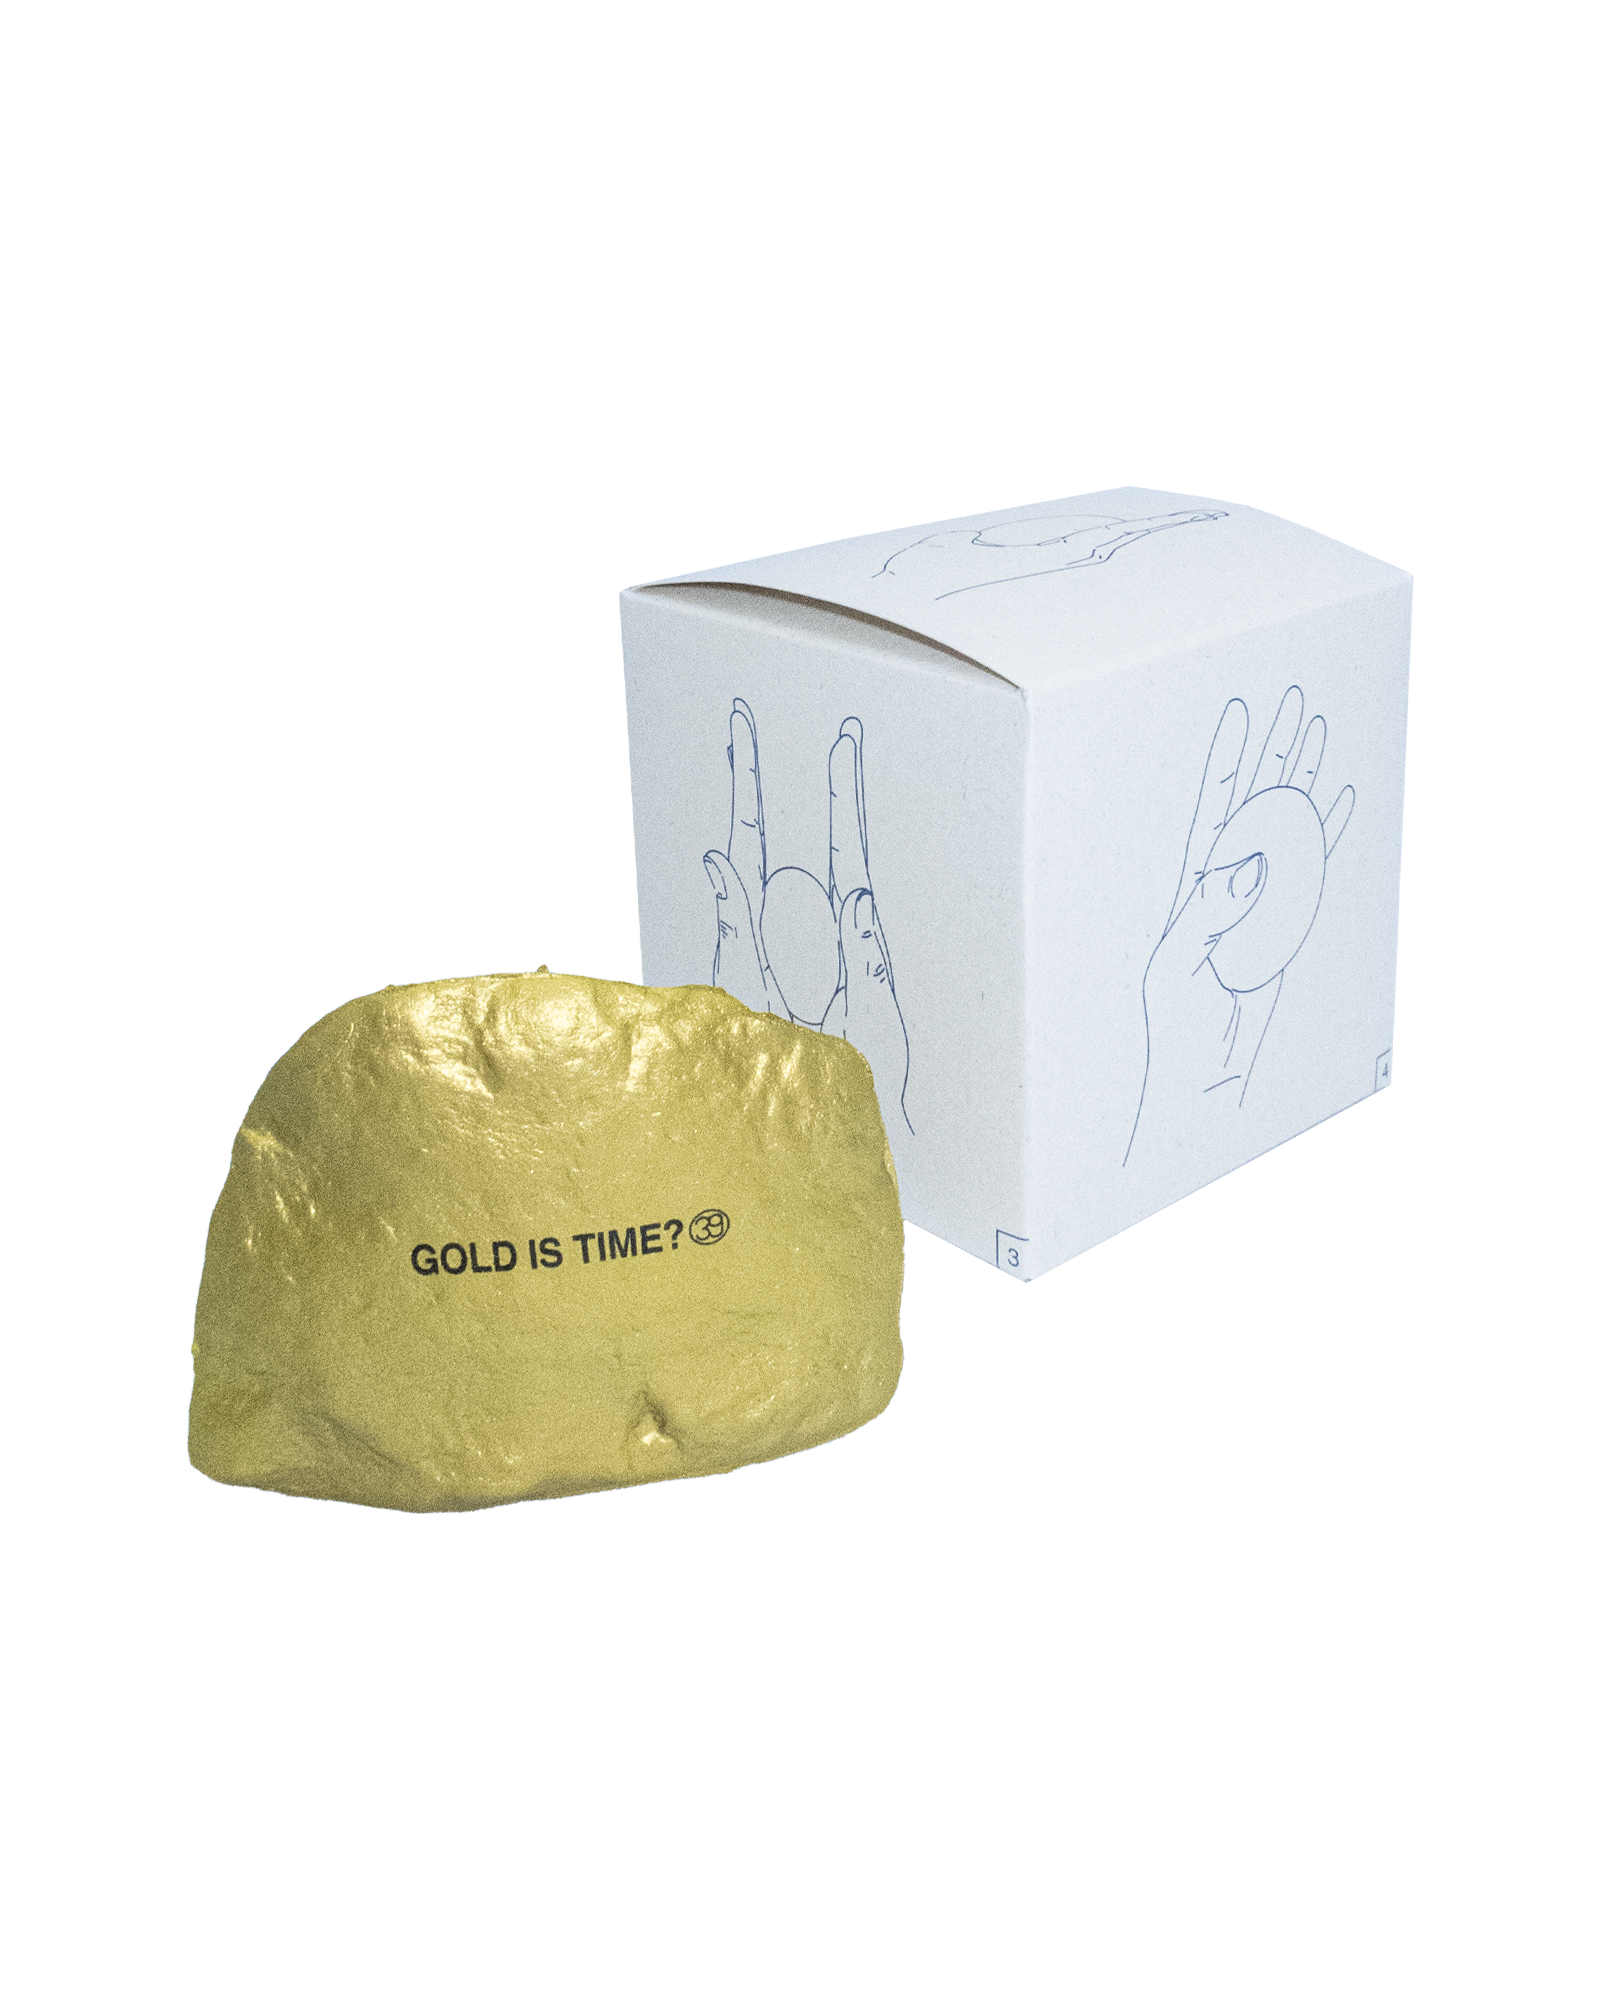 [Limited] GOLDEN NUGGET Stress Ball Random Box